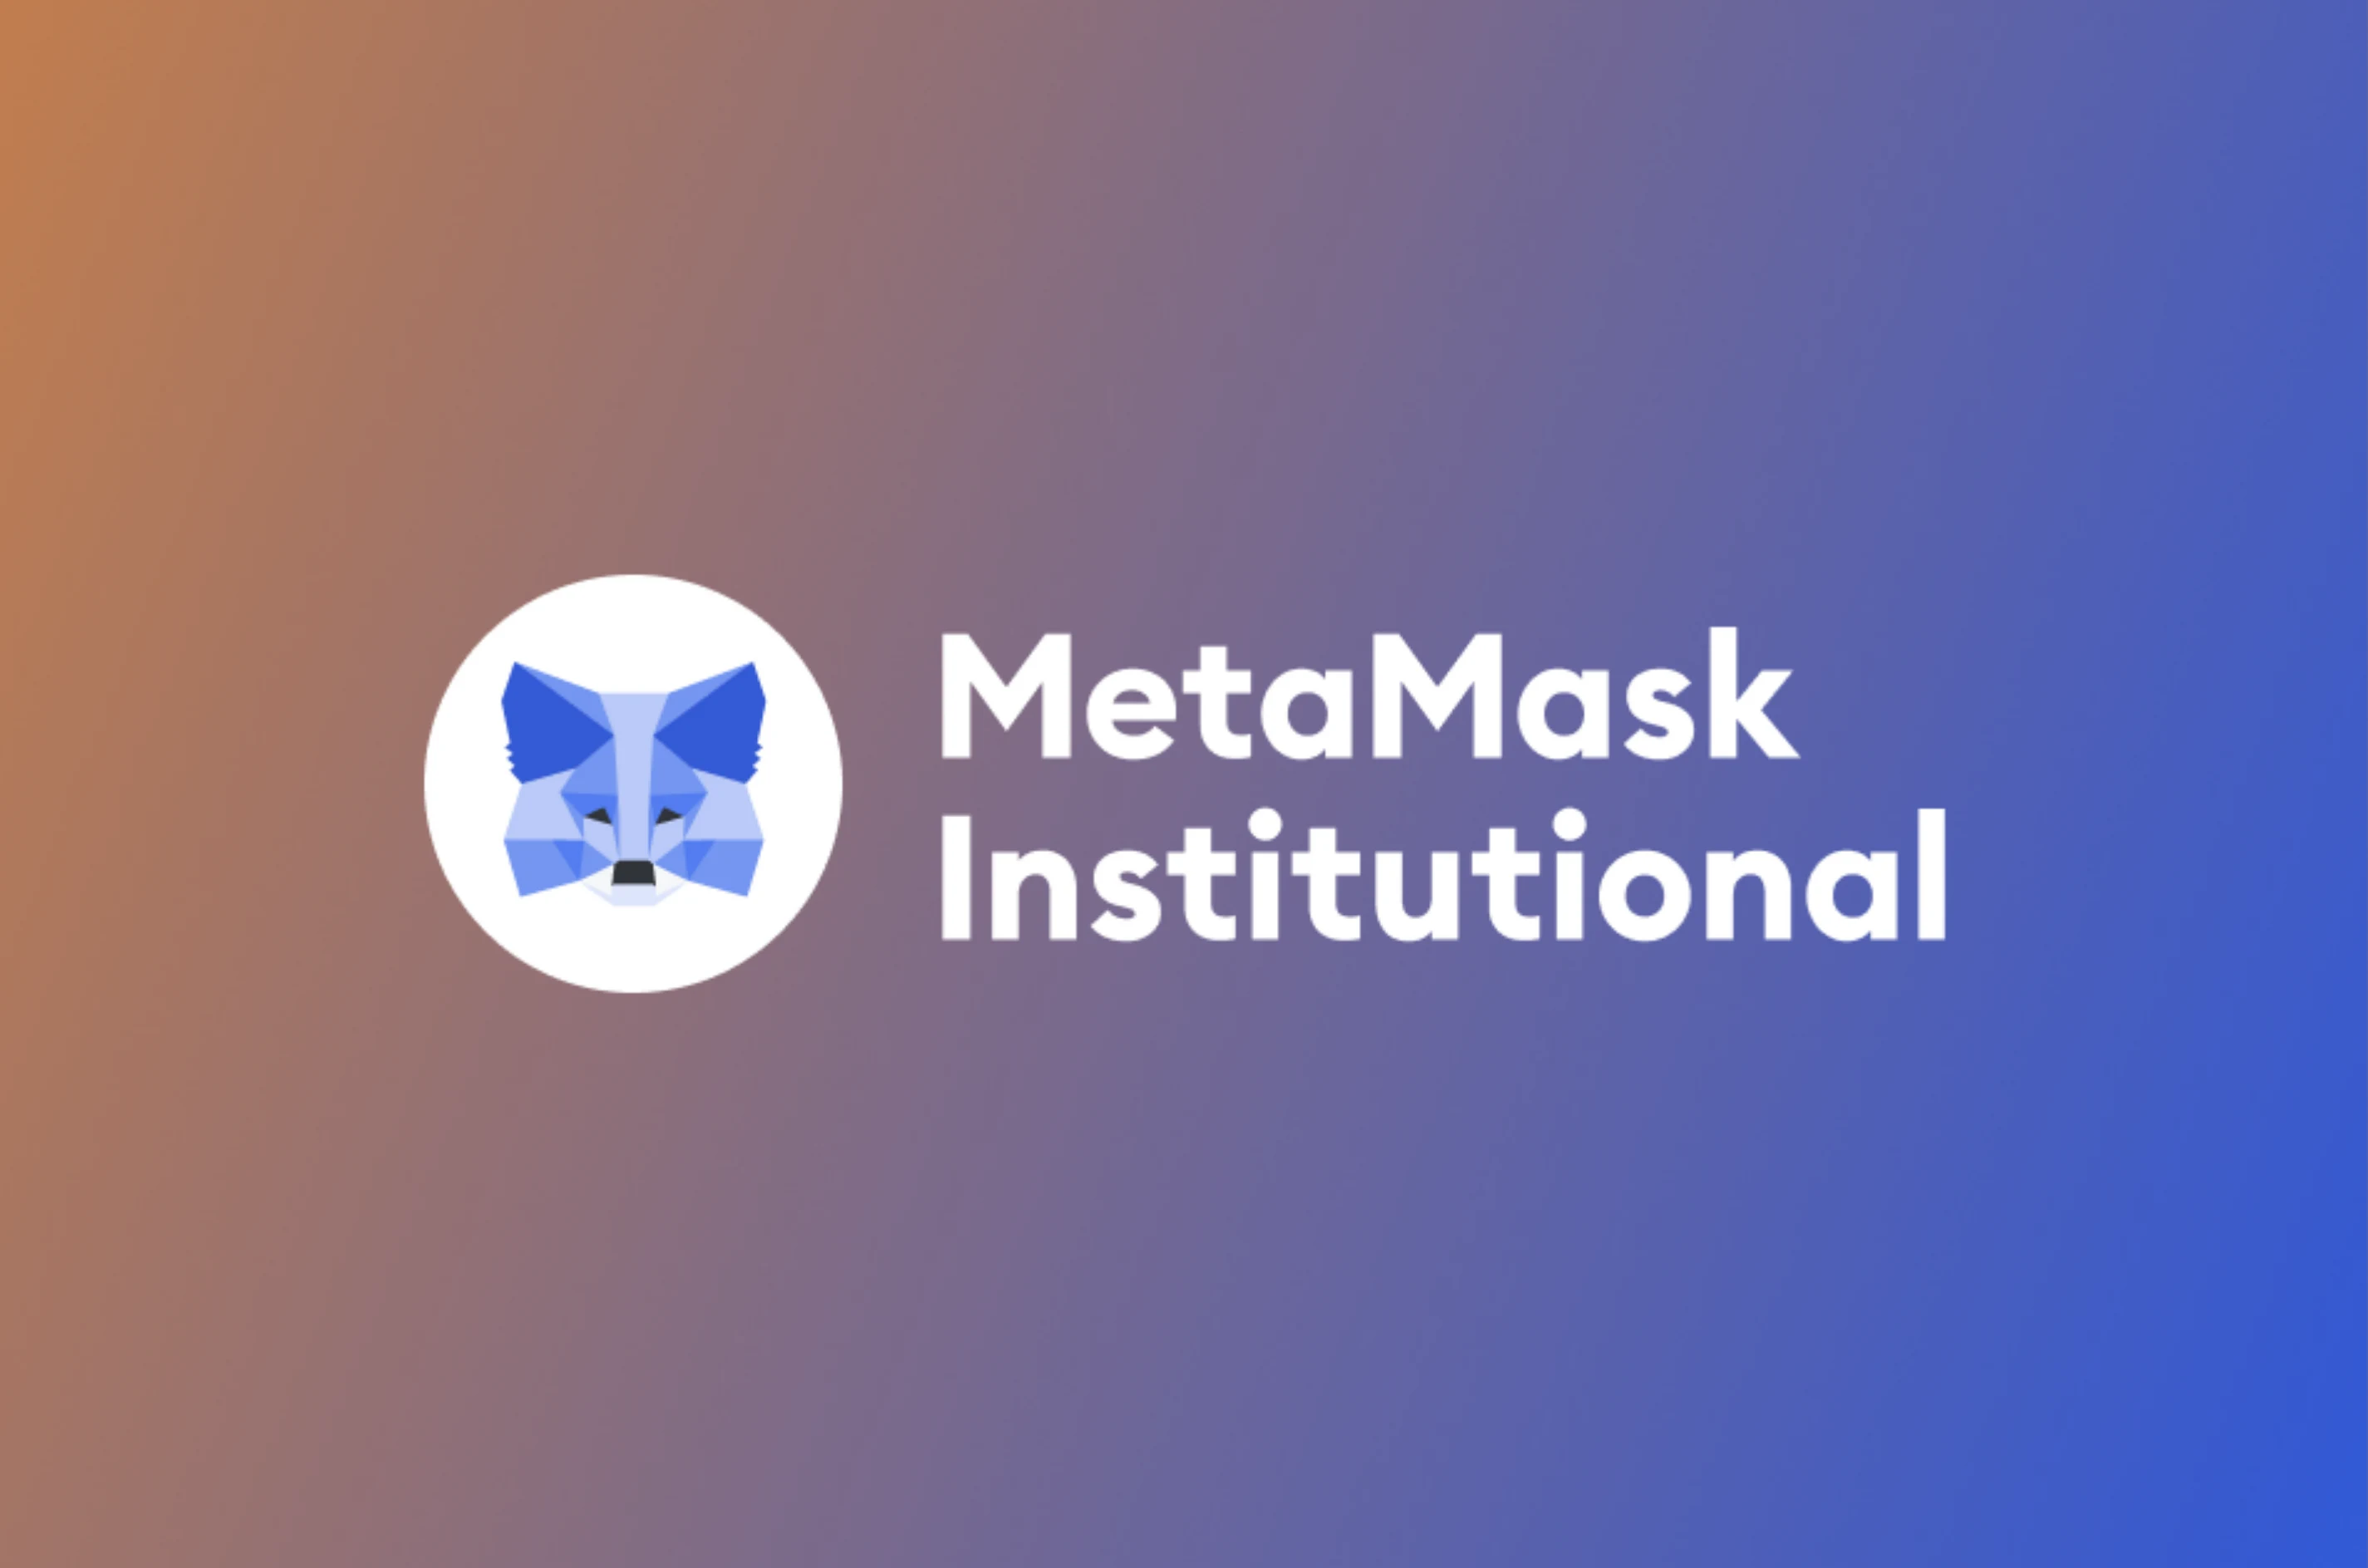 Image: Introducing MetaMask Institutional